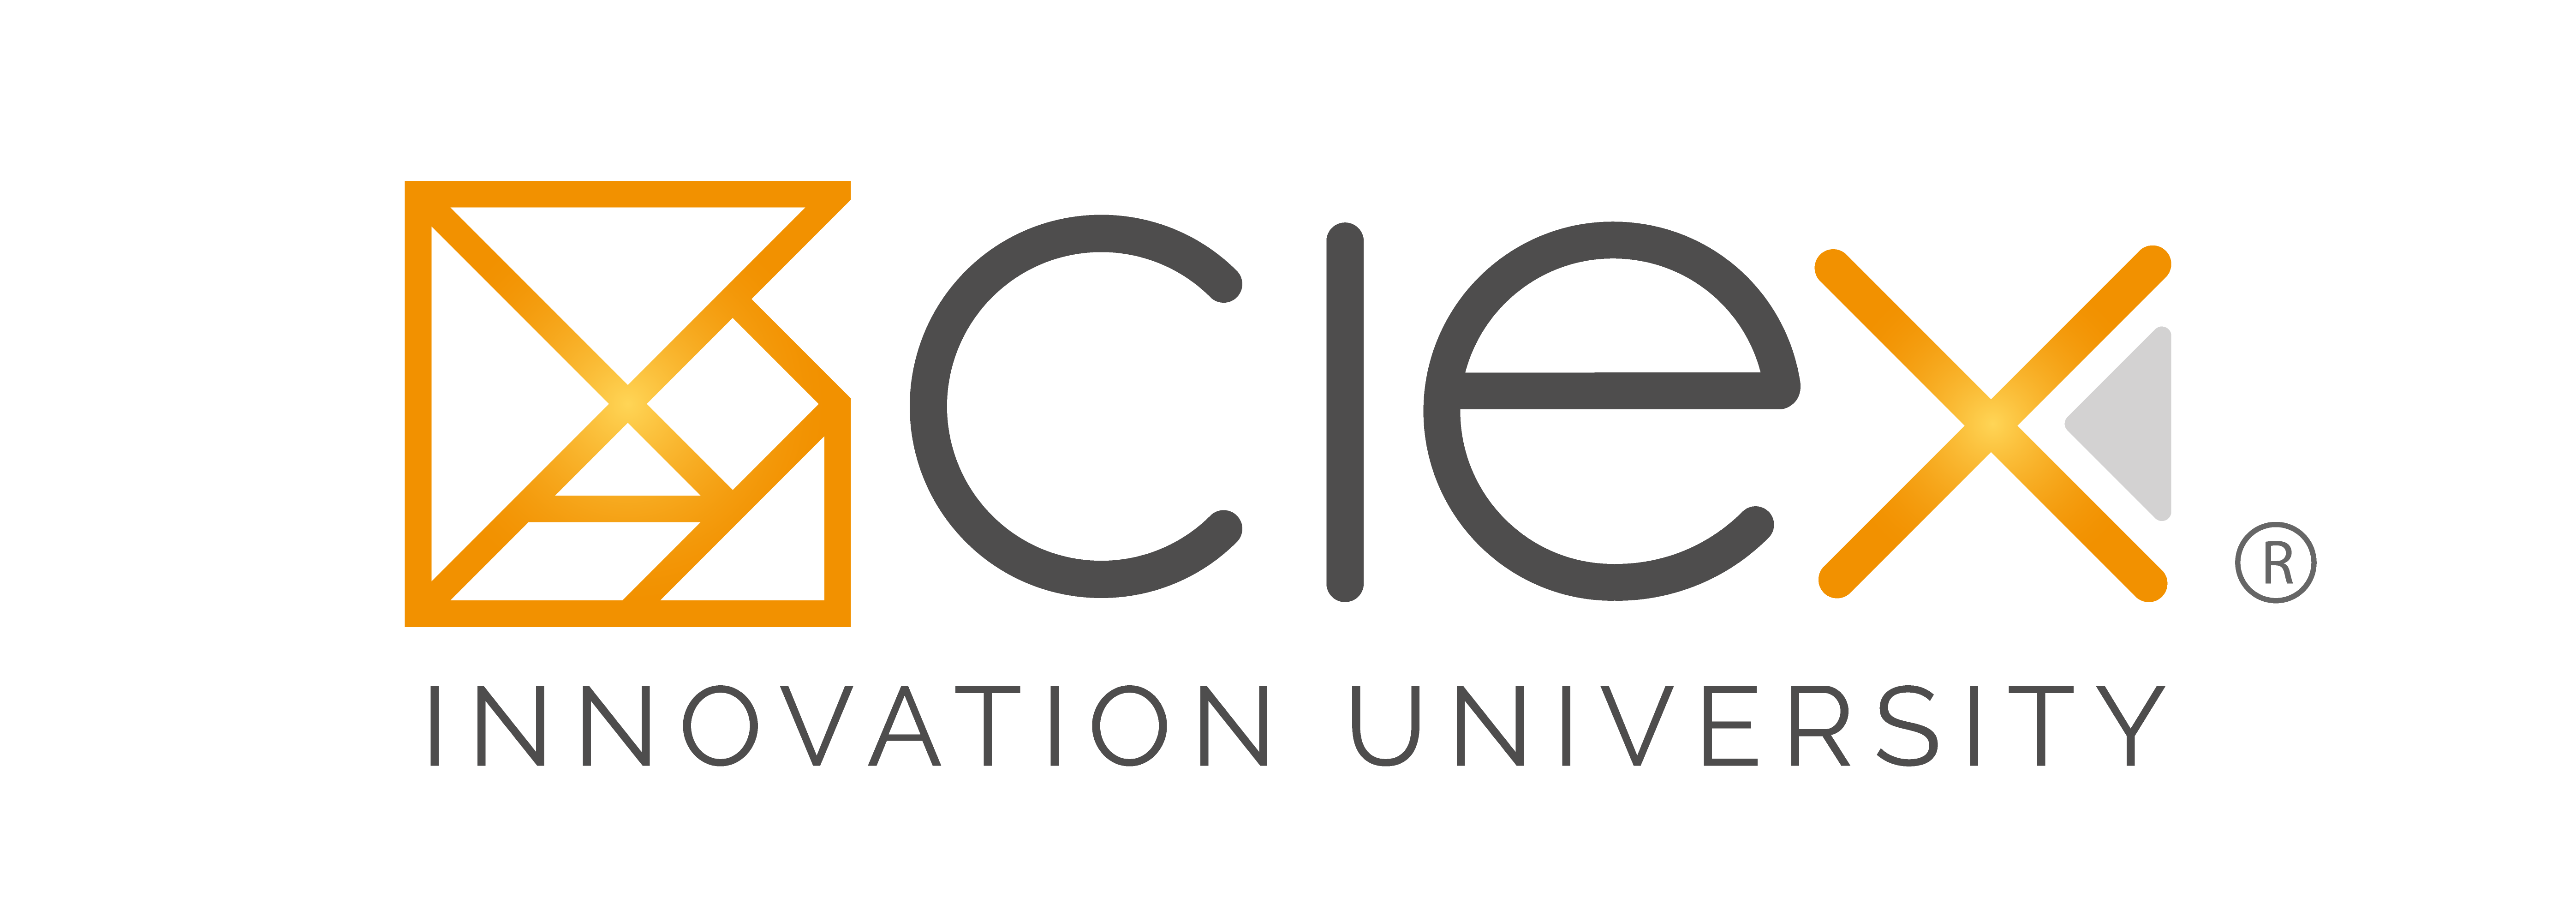 CIEx Innovation University USA